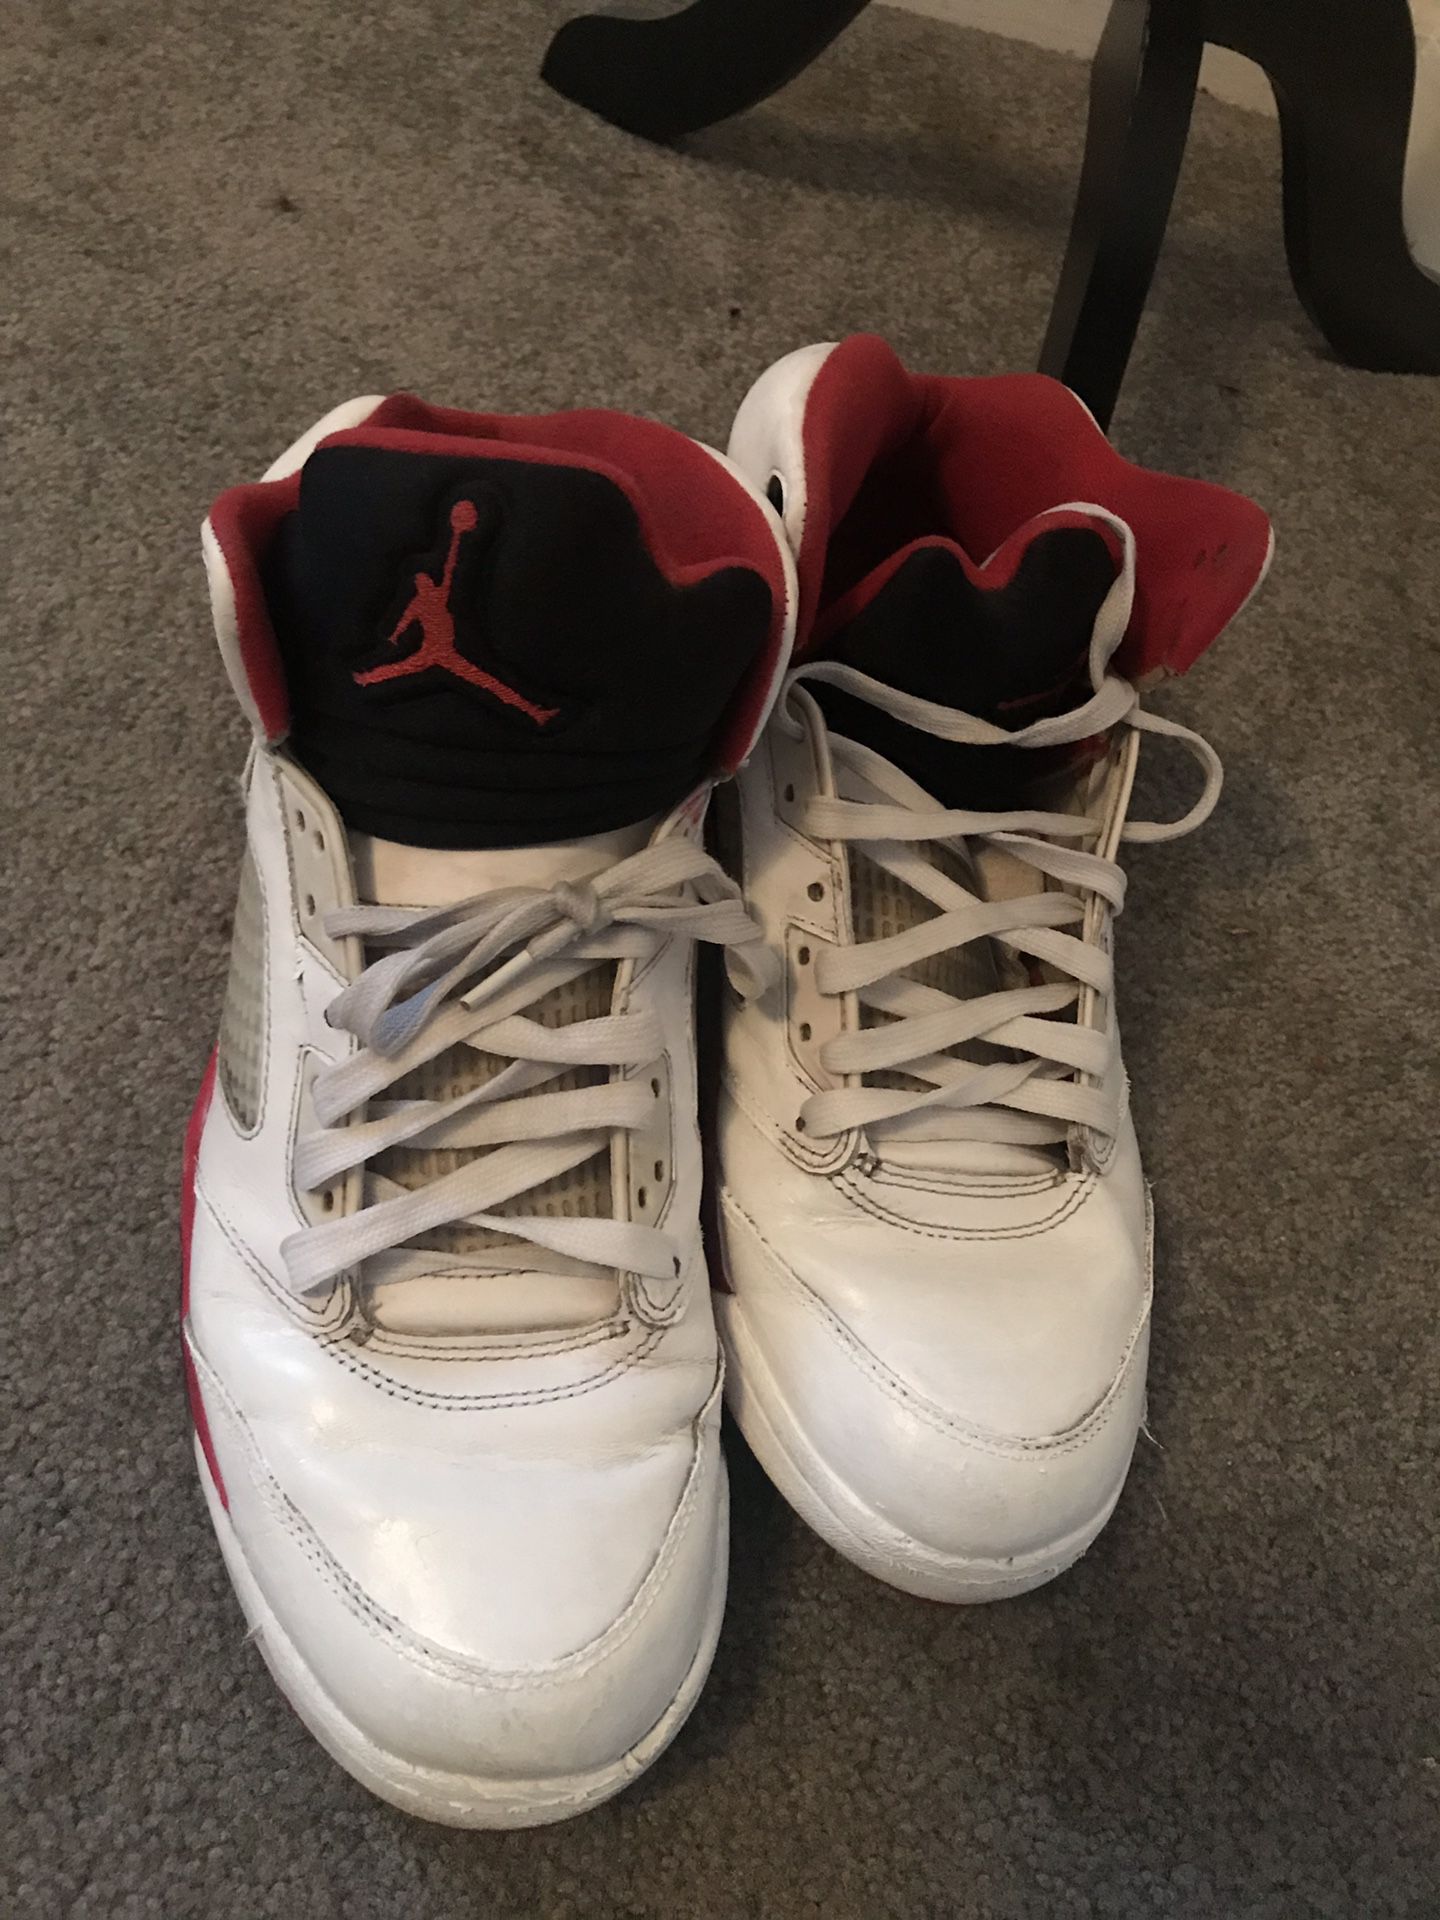 Retro Nike air Jordan 5 size 11